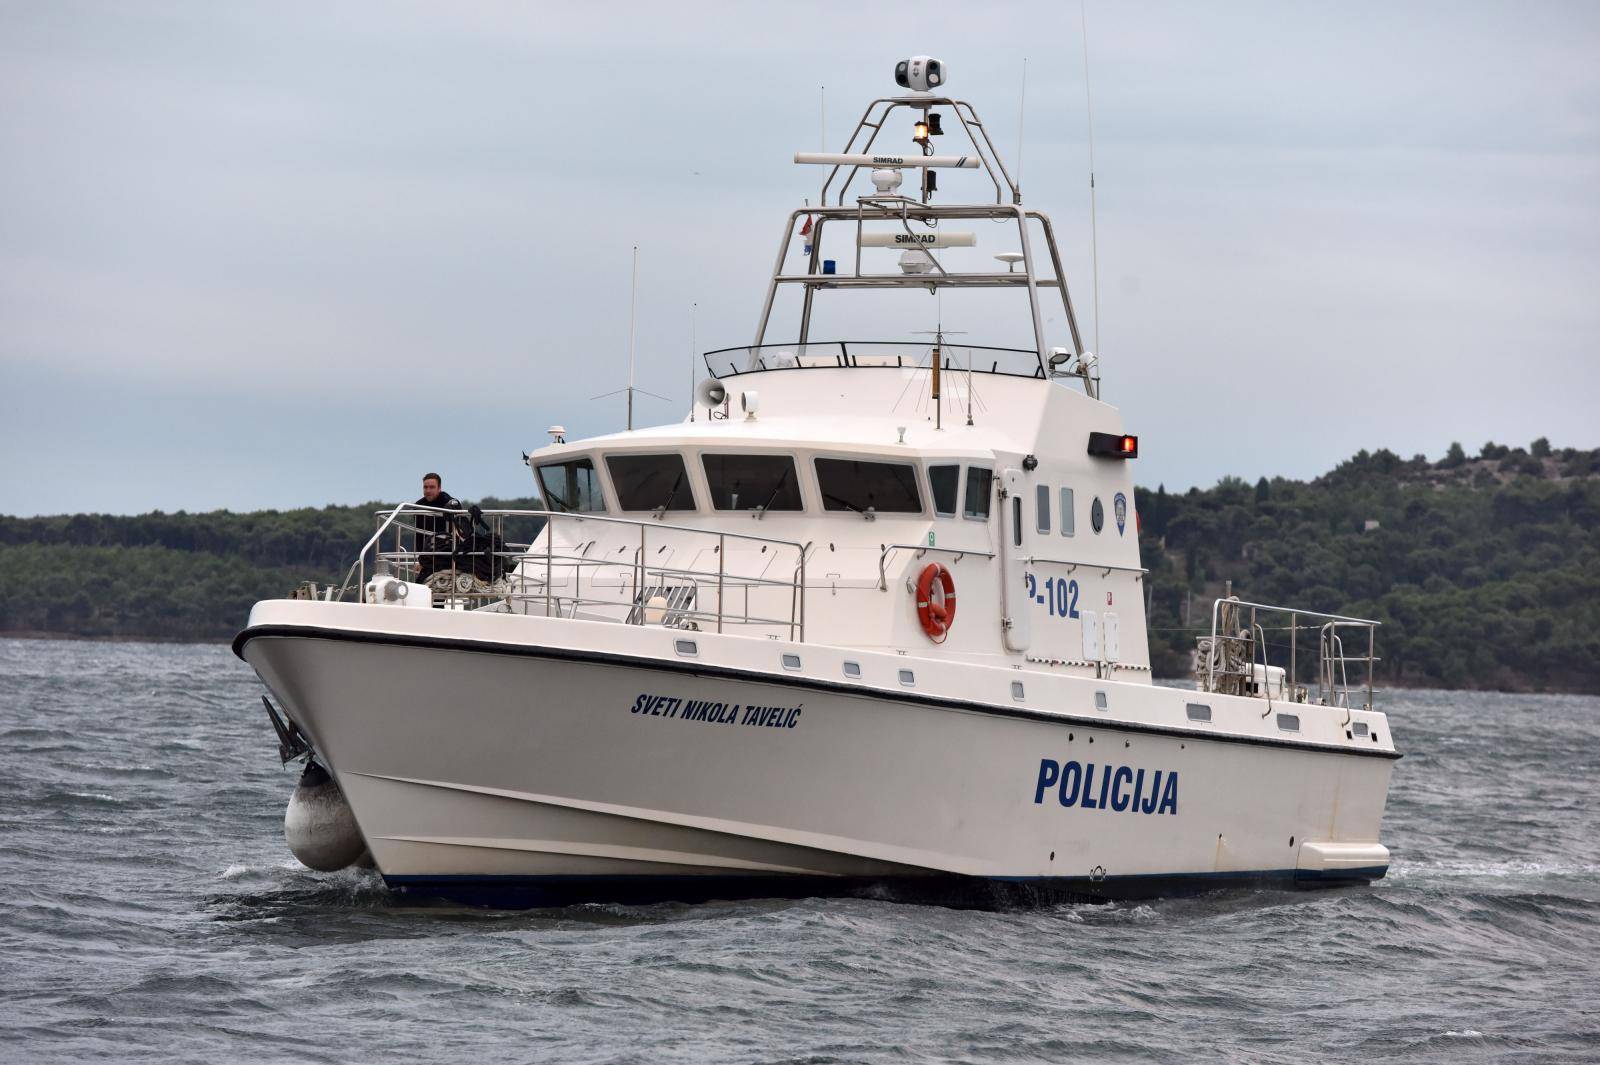 Å ibenik: Pomorska policija unatoÄ loÅ¡em vremenu plovi morem